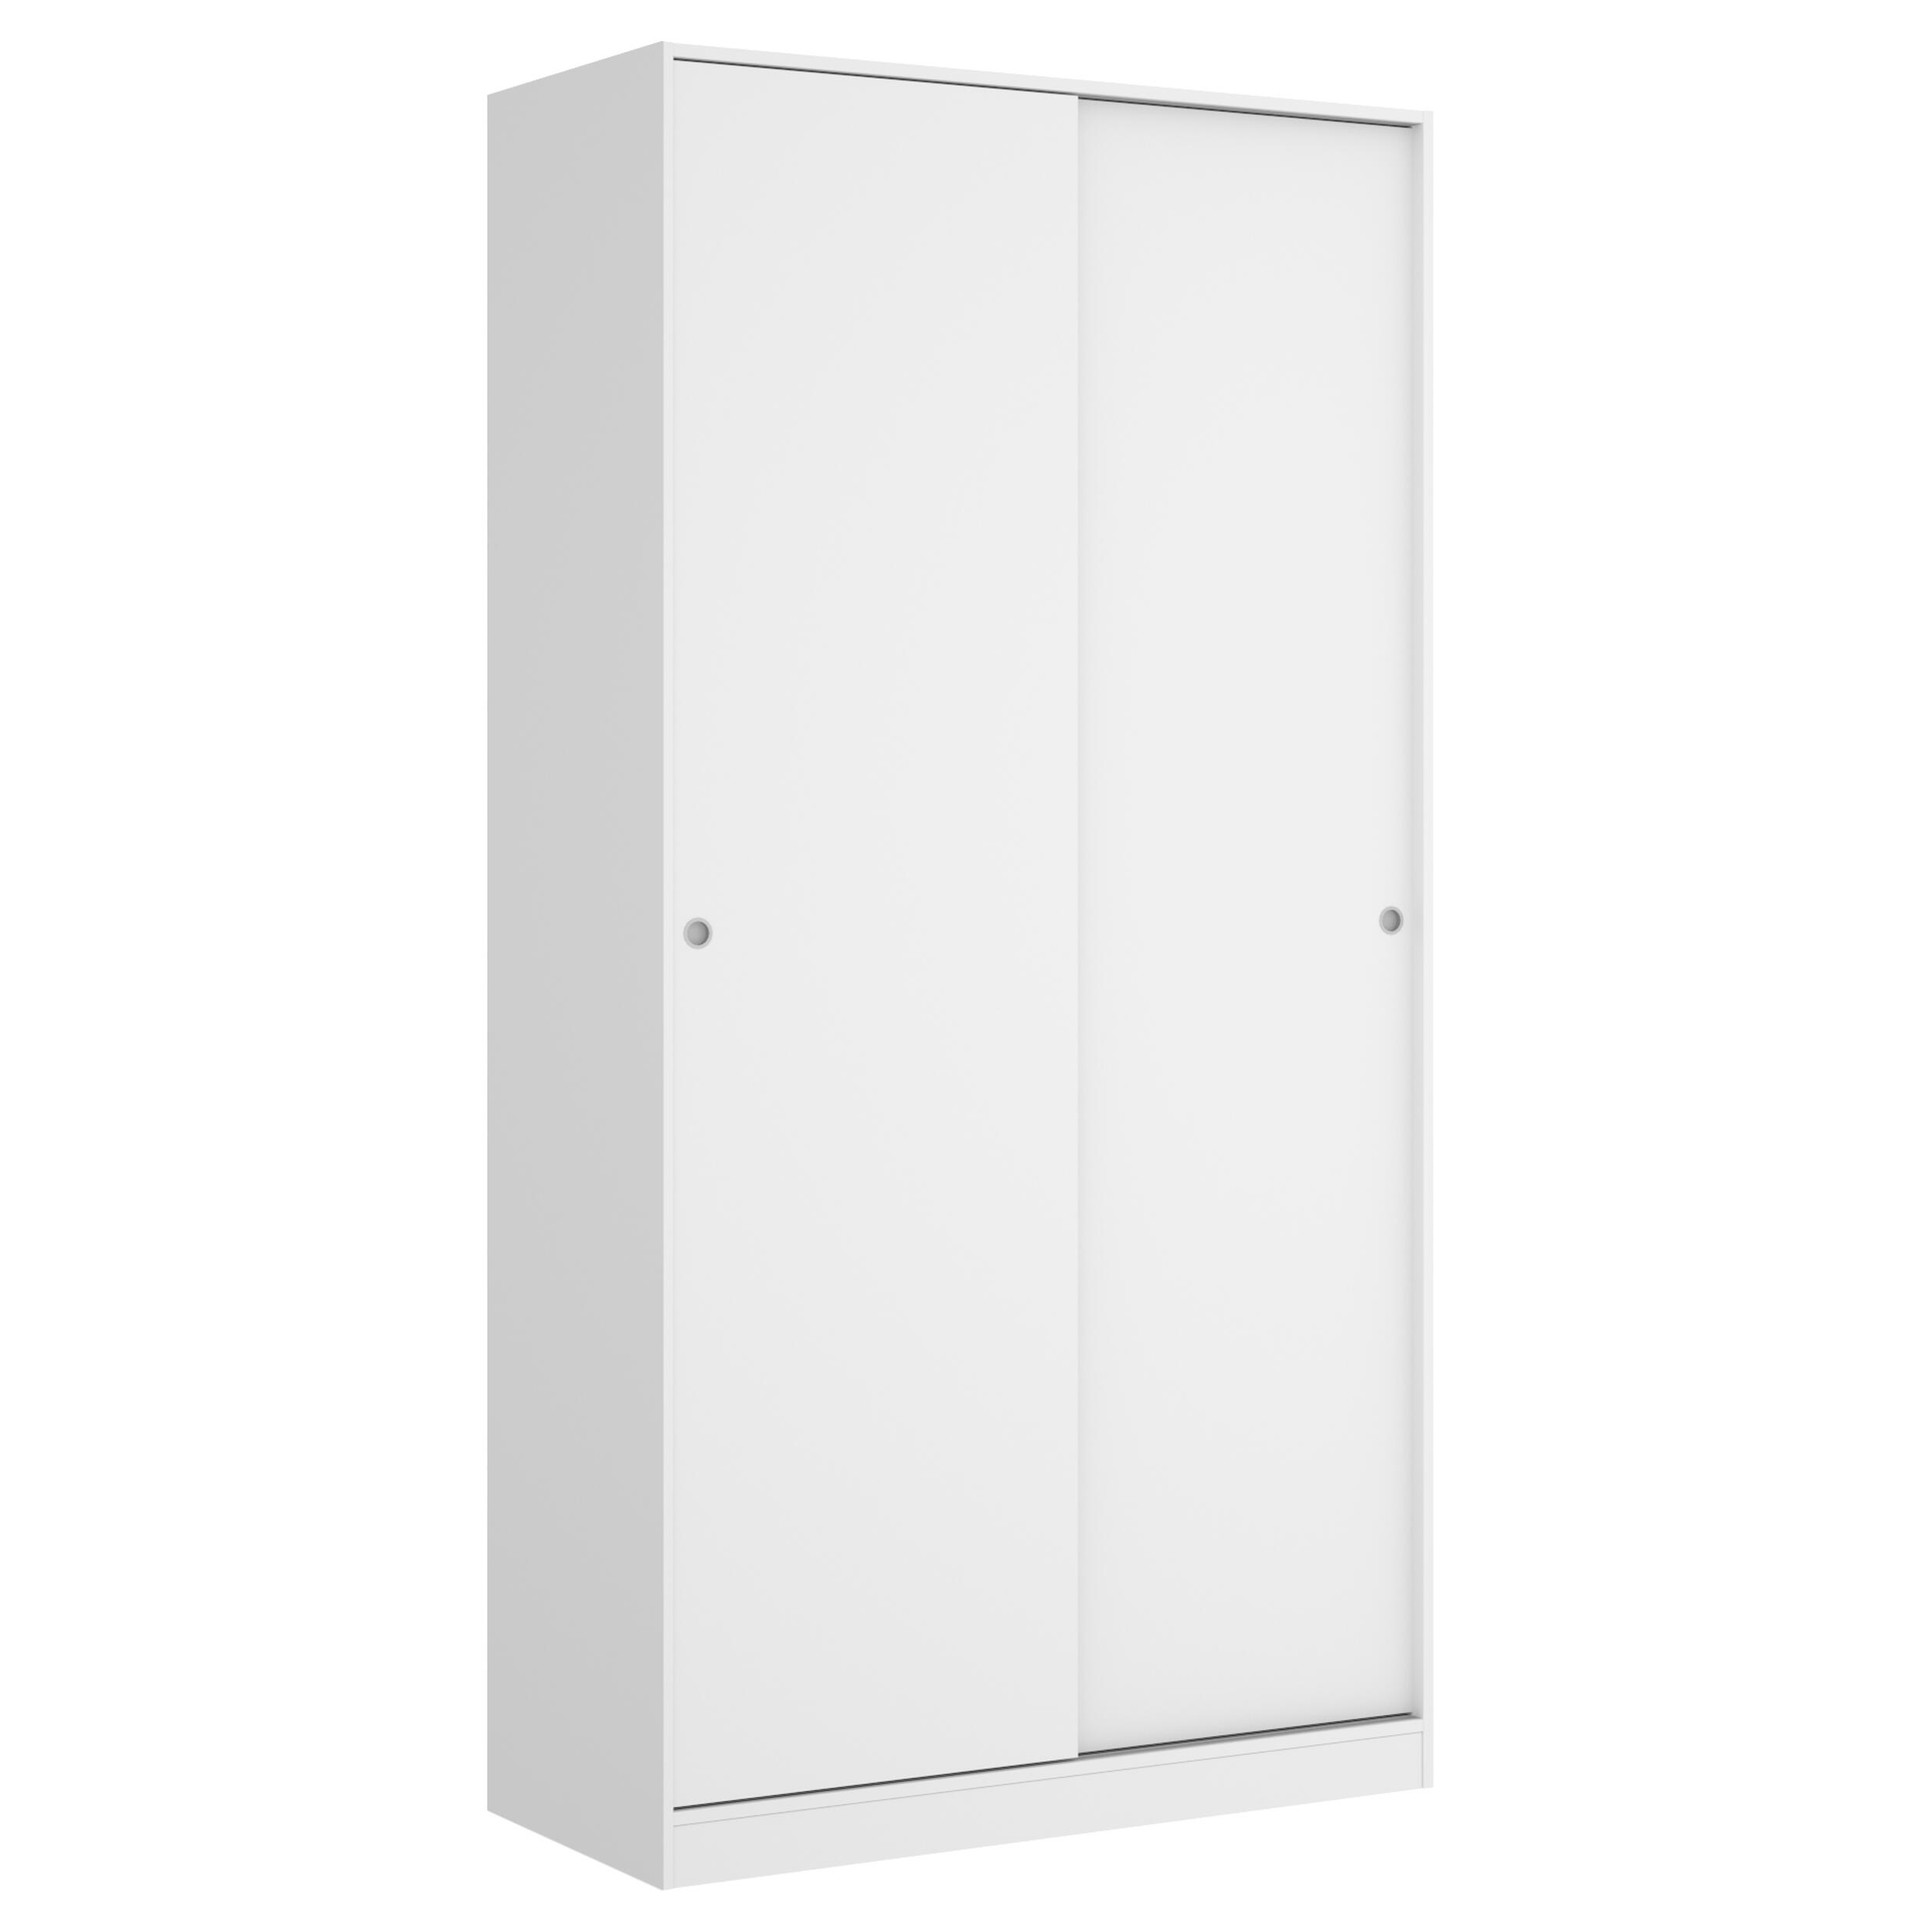 Armario ropero puerta corredera blanco 100x204xcm